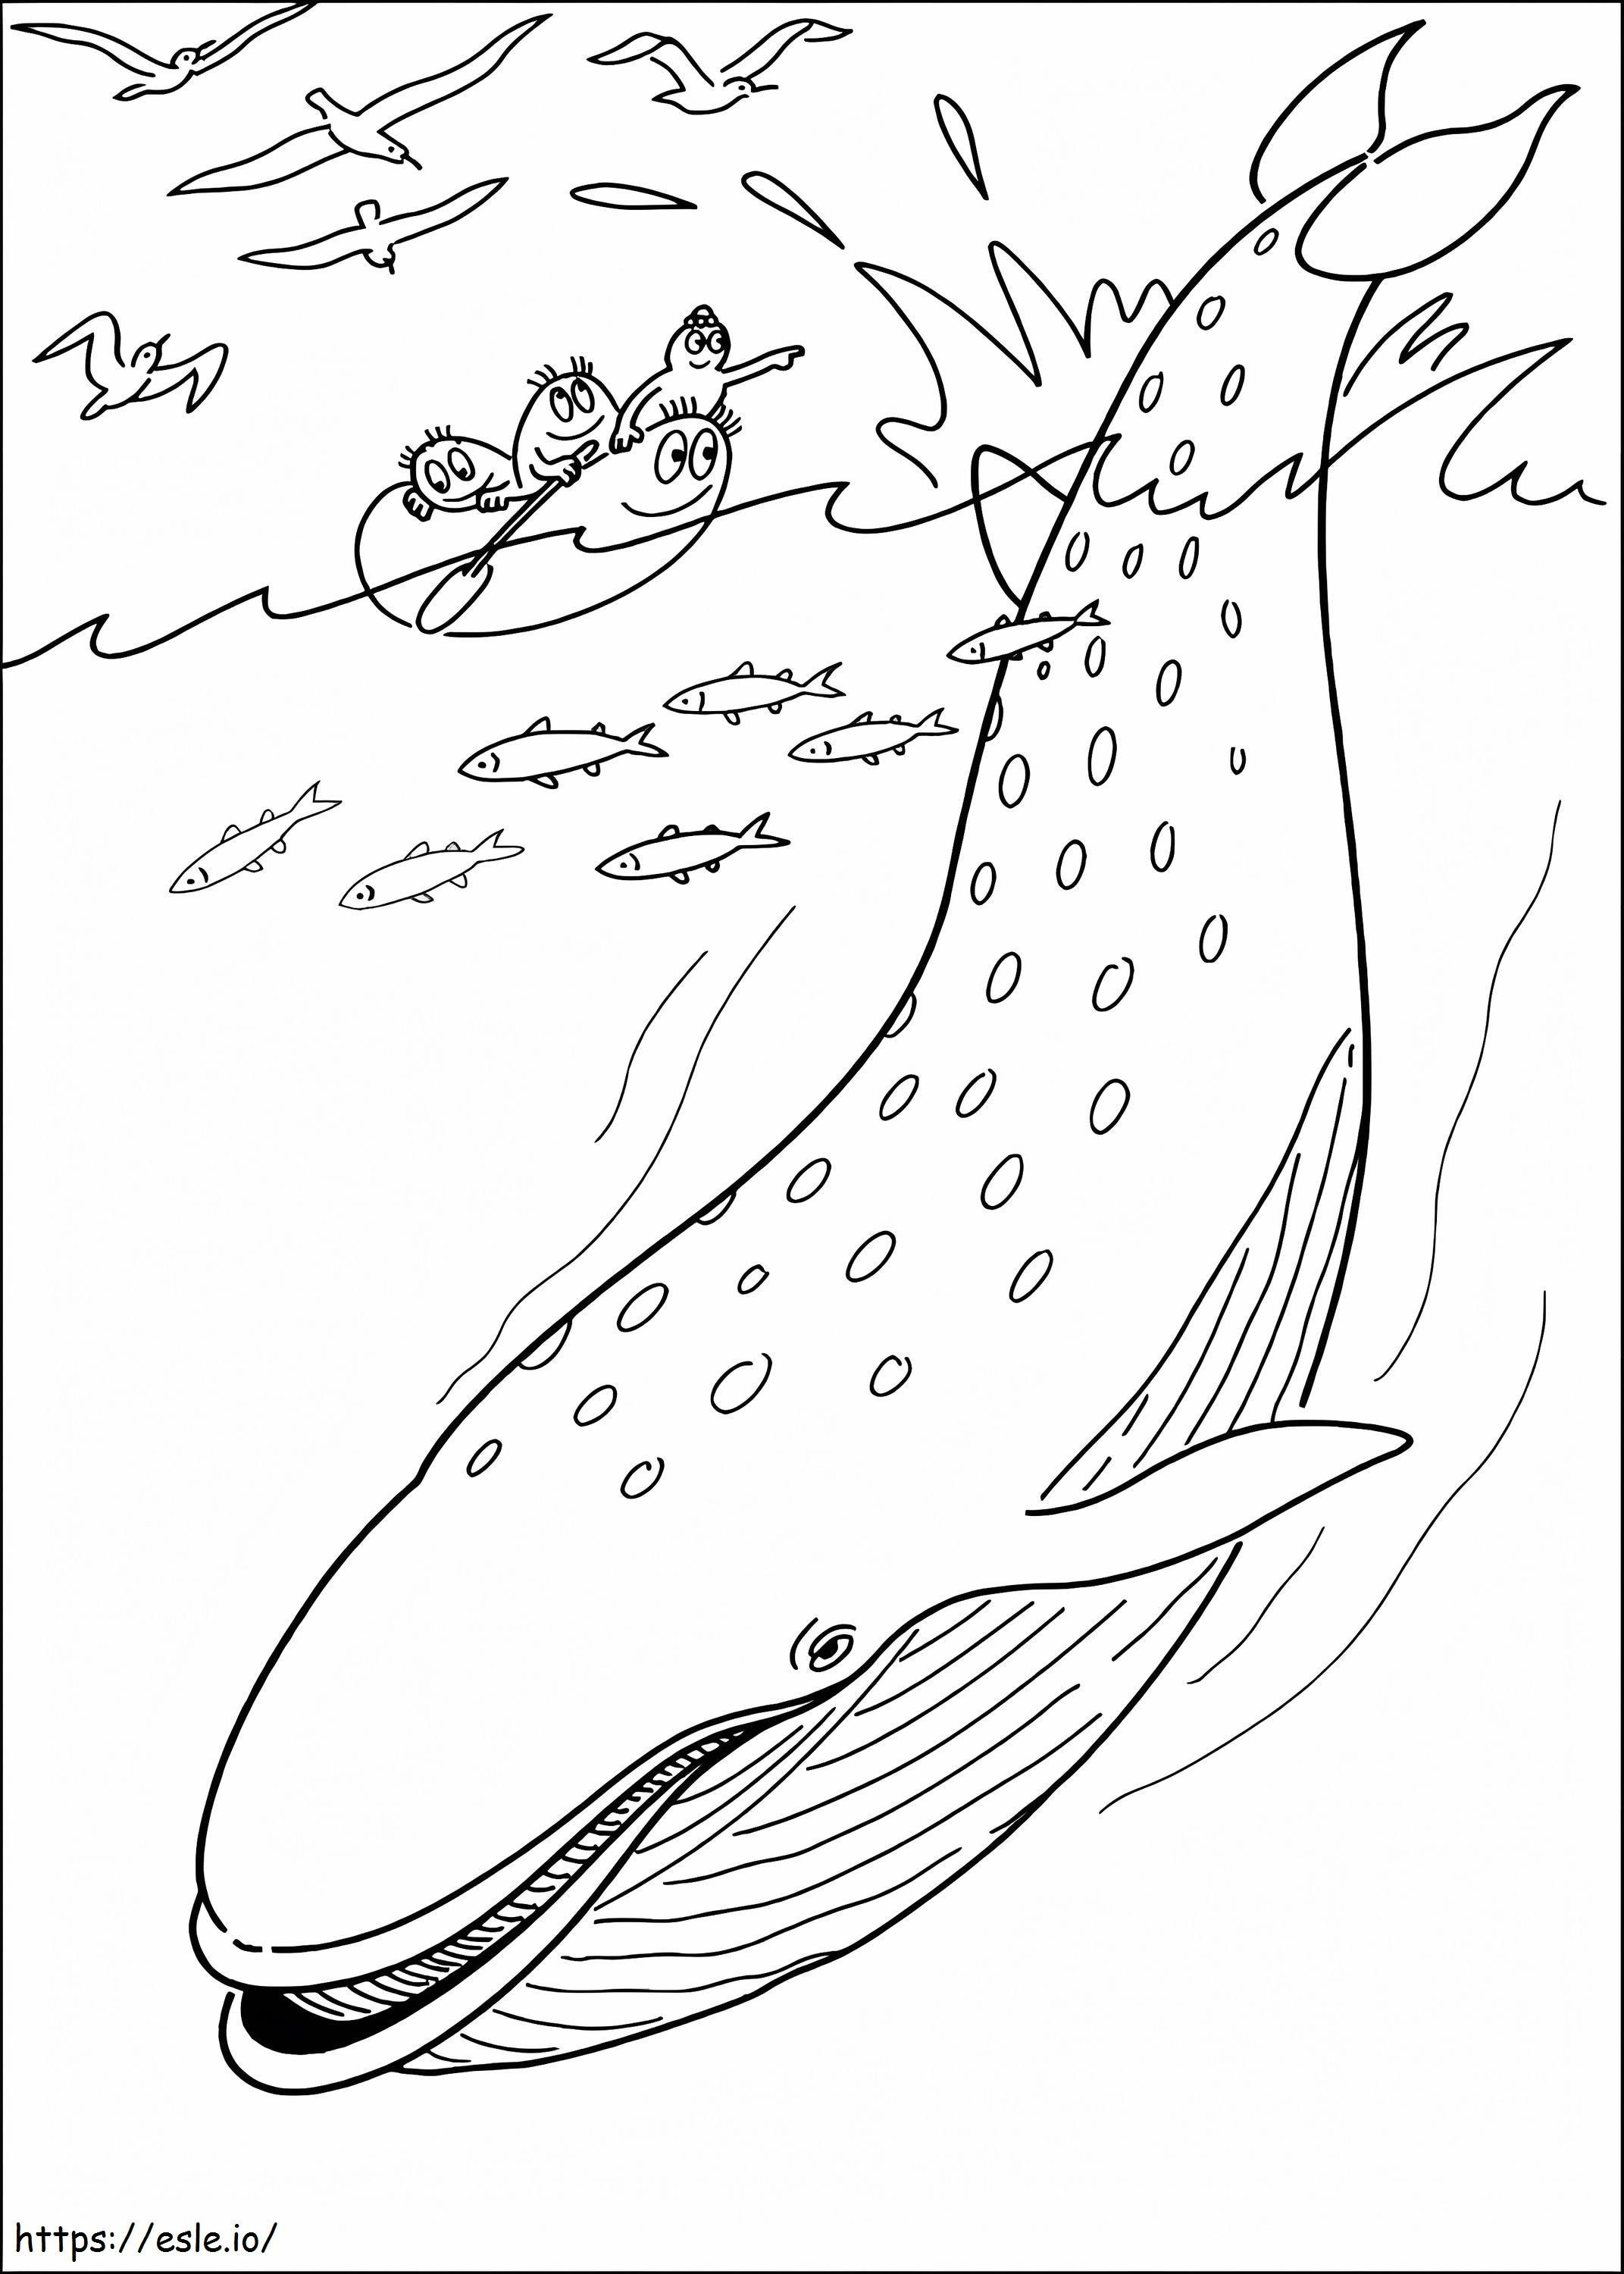 Barbapapa und Wal ausmalbilder